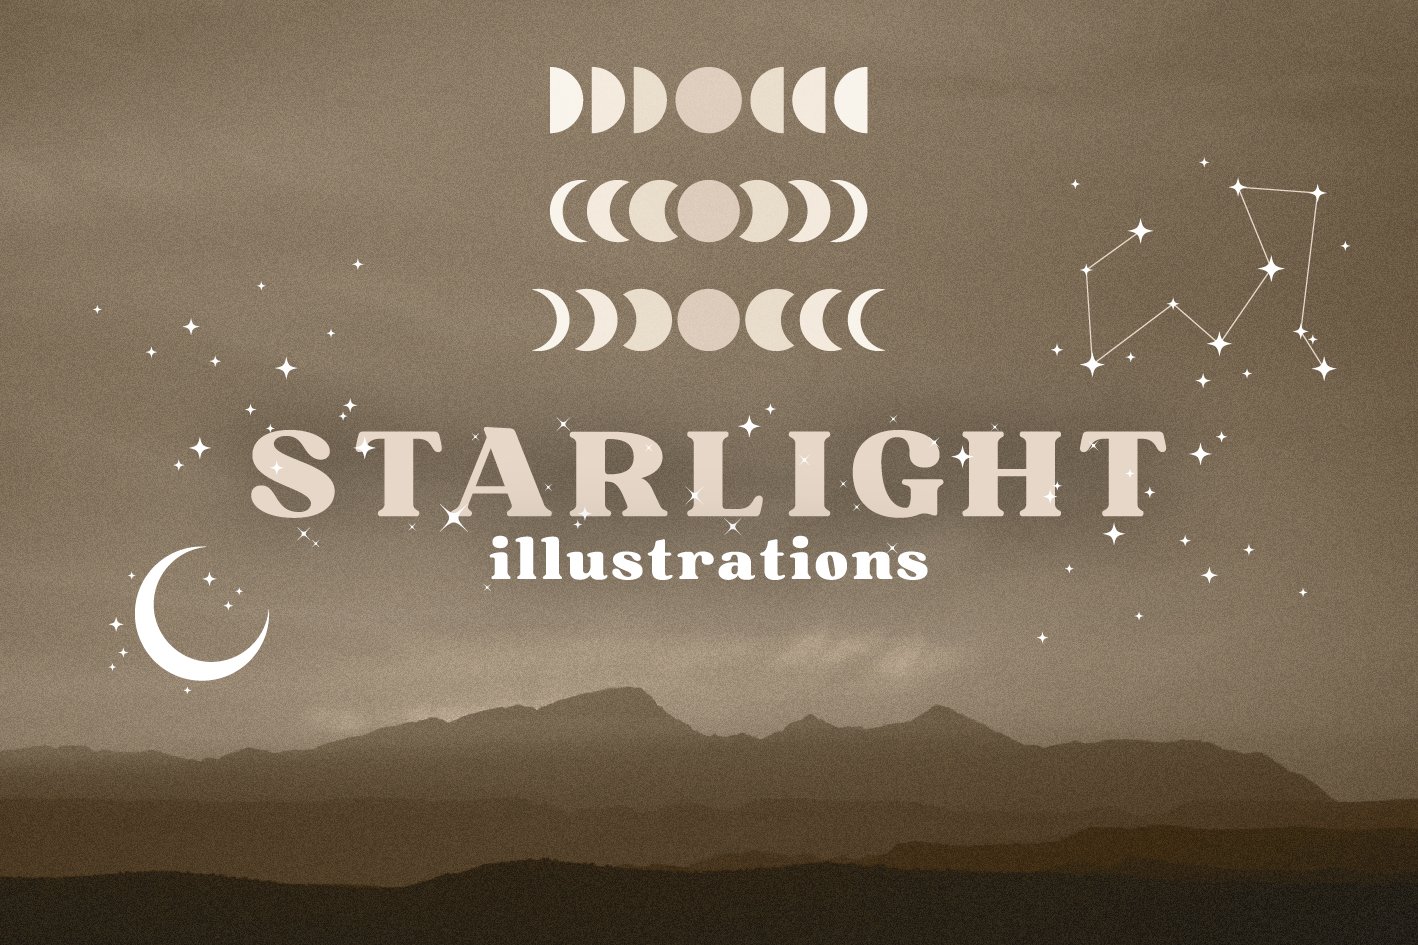 starlight illustrations cover image.